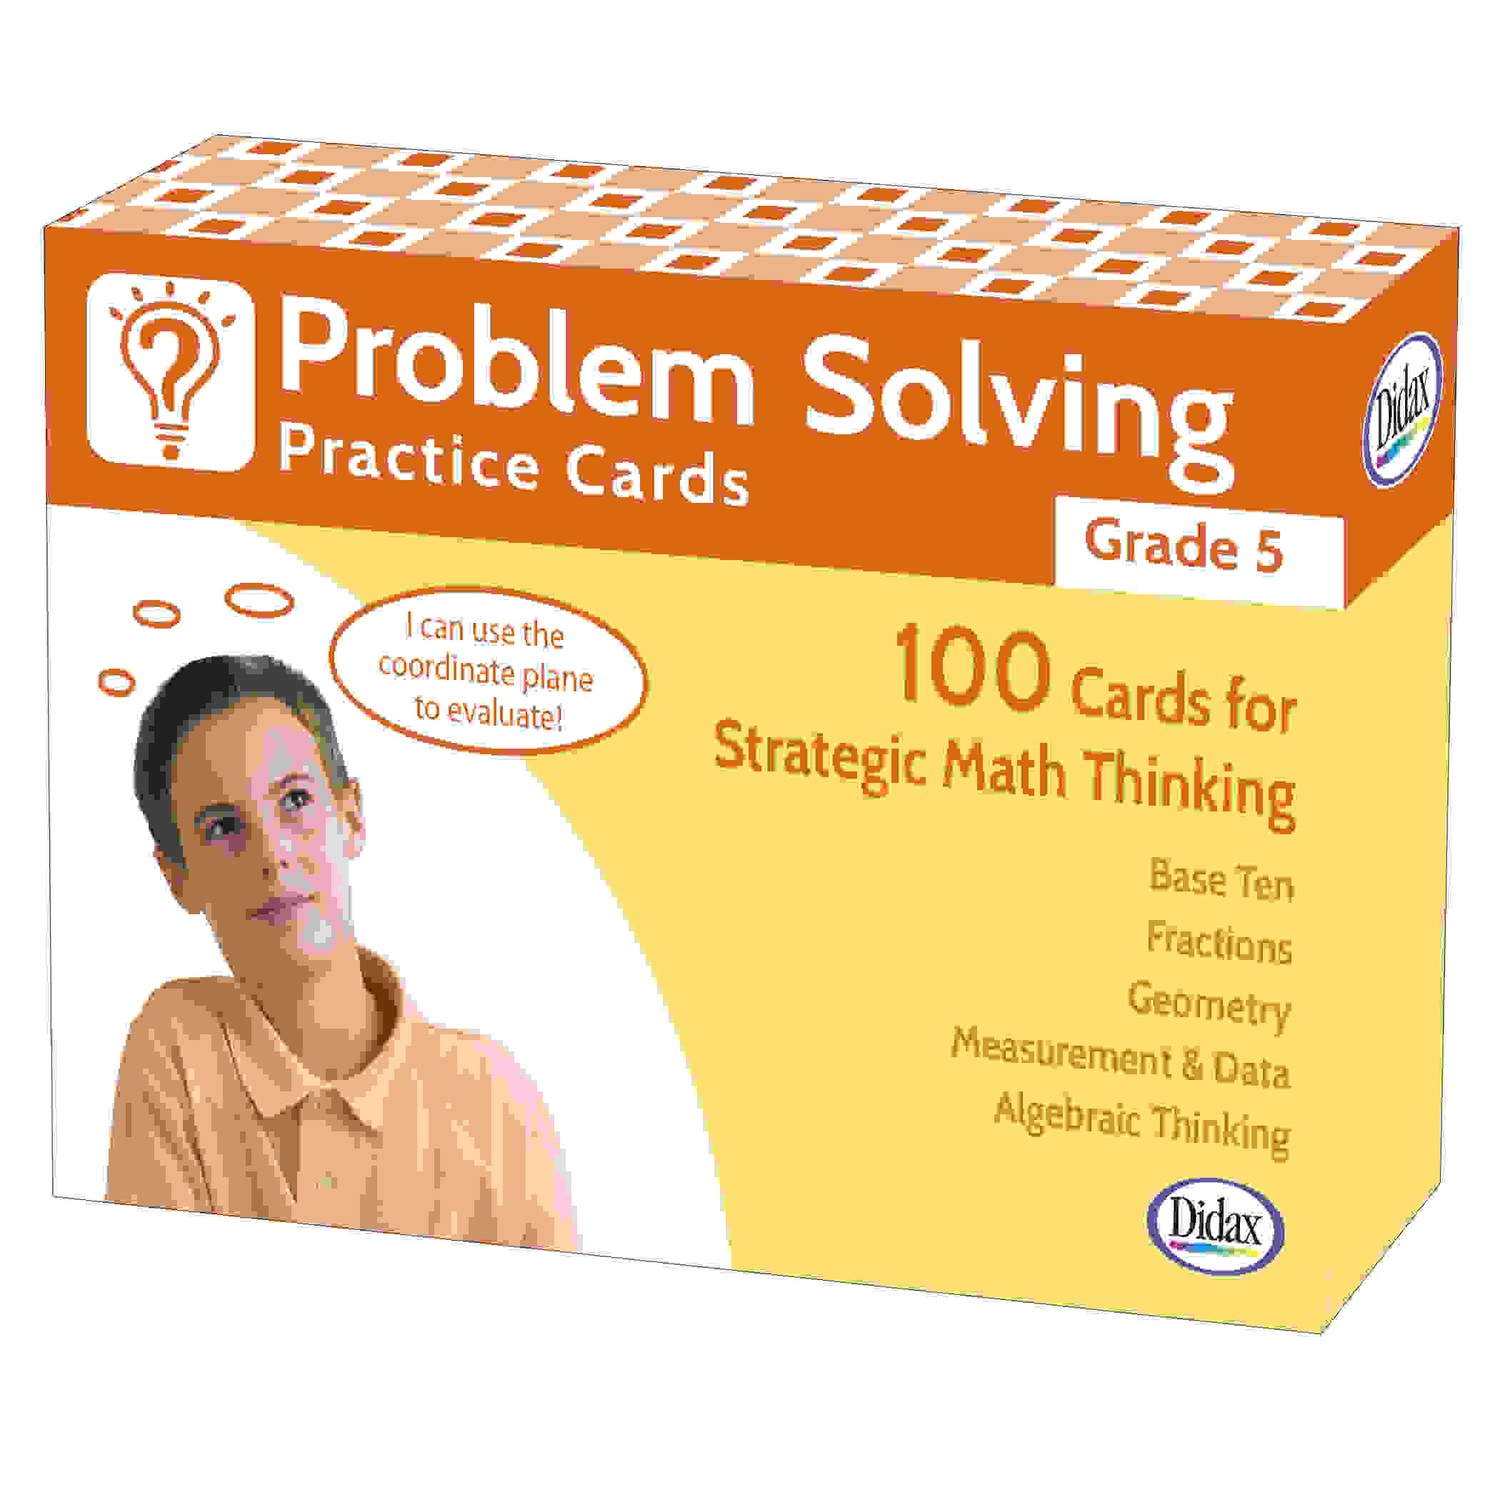 Problem Solving Practice Cards, Grade 5